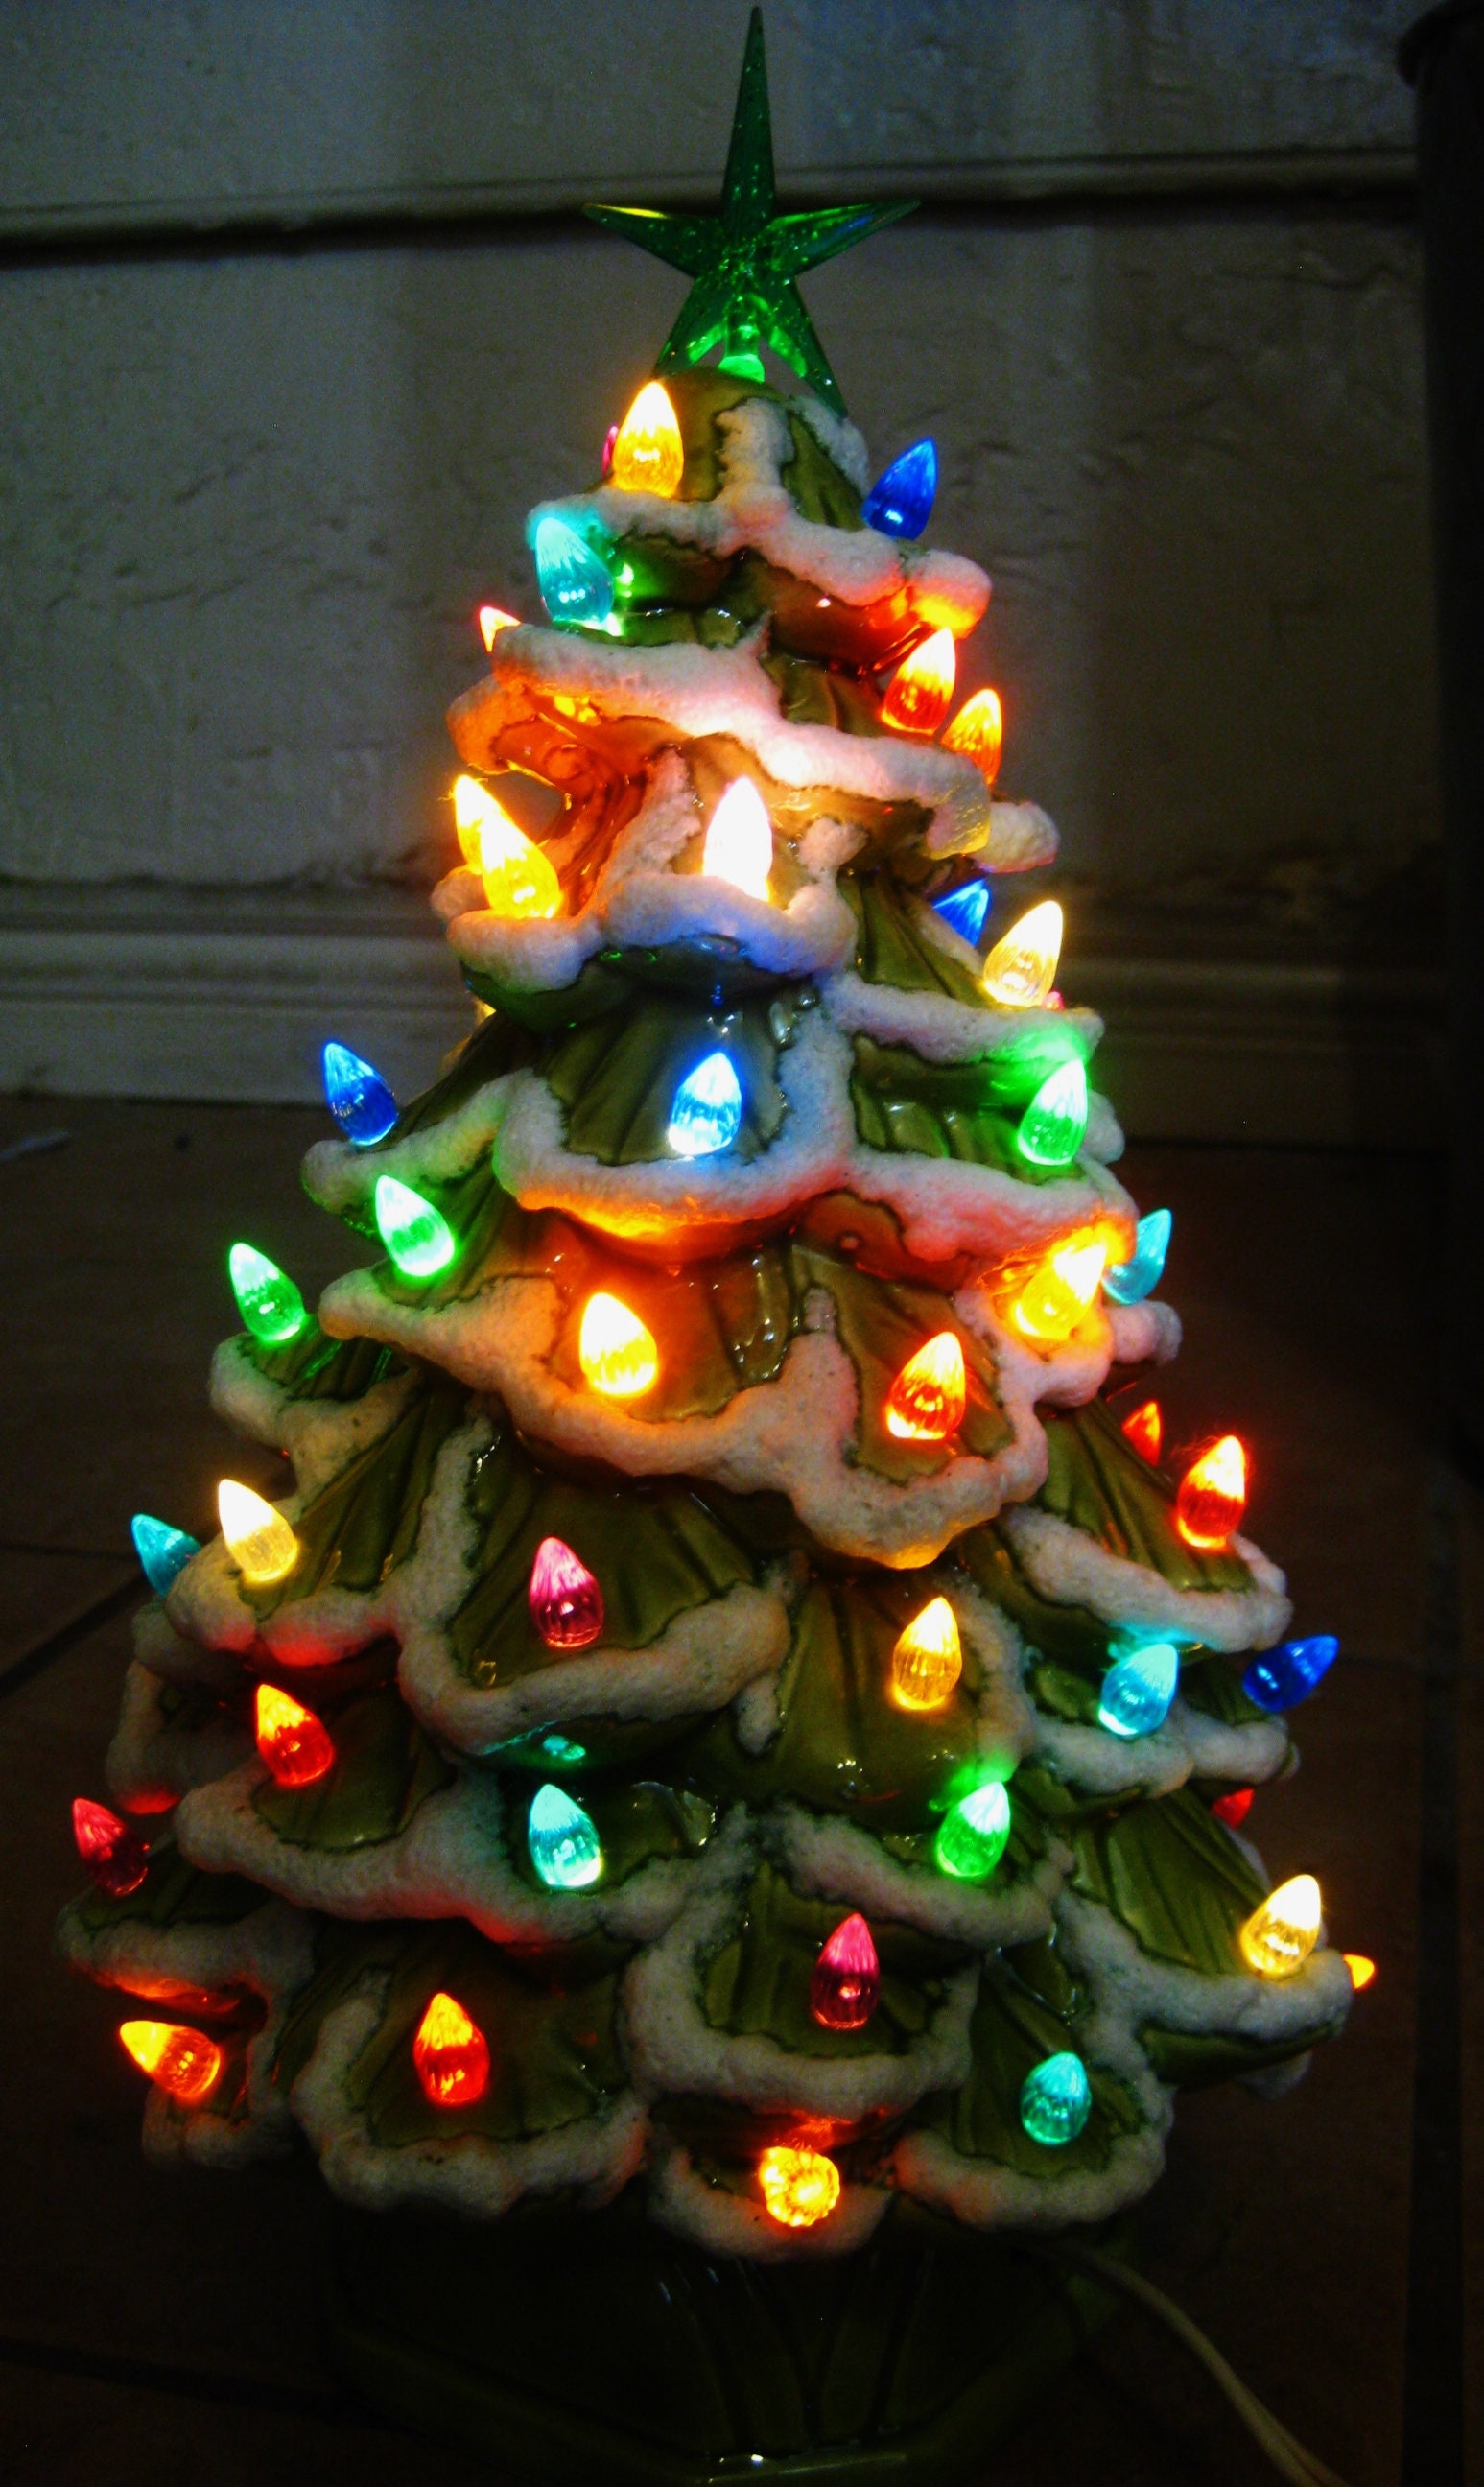 Vintage classic green light up Christmas tree lamp holiday decor – Lillian  Grey